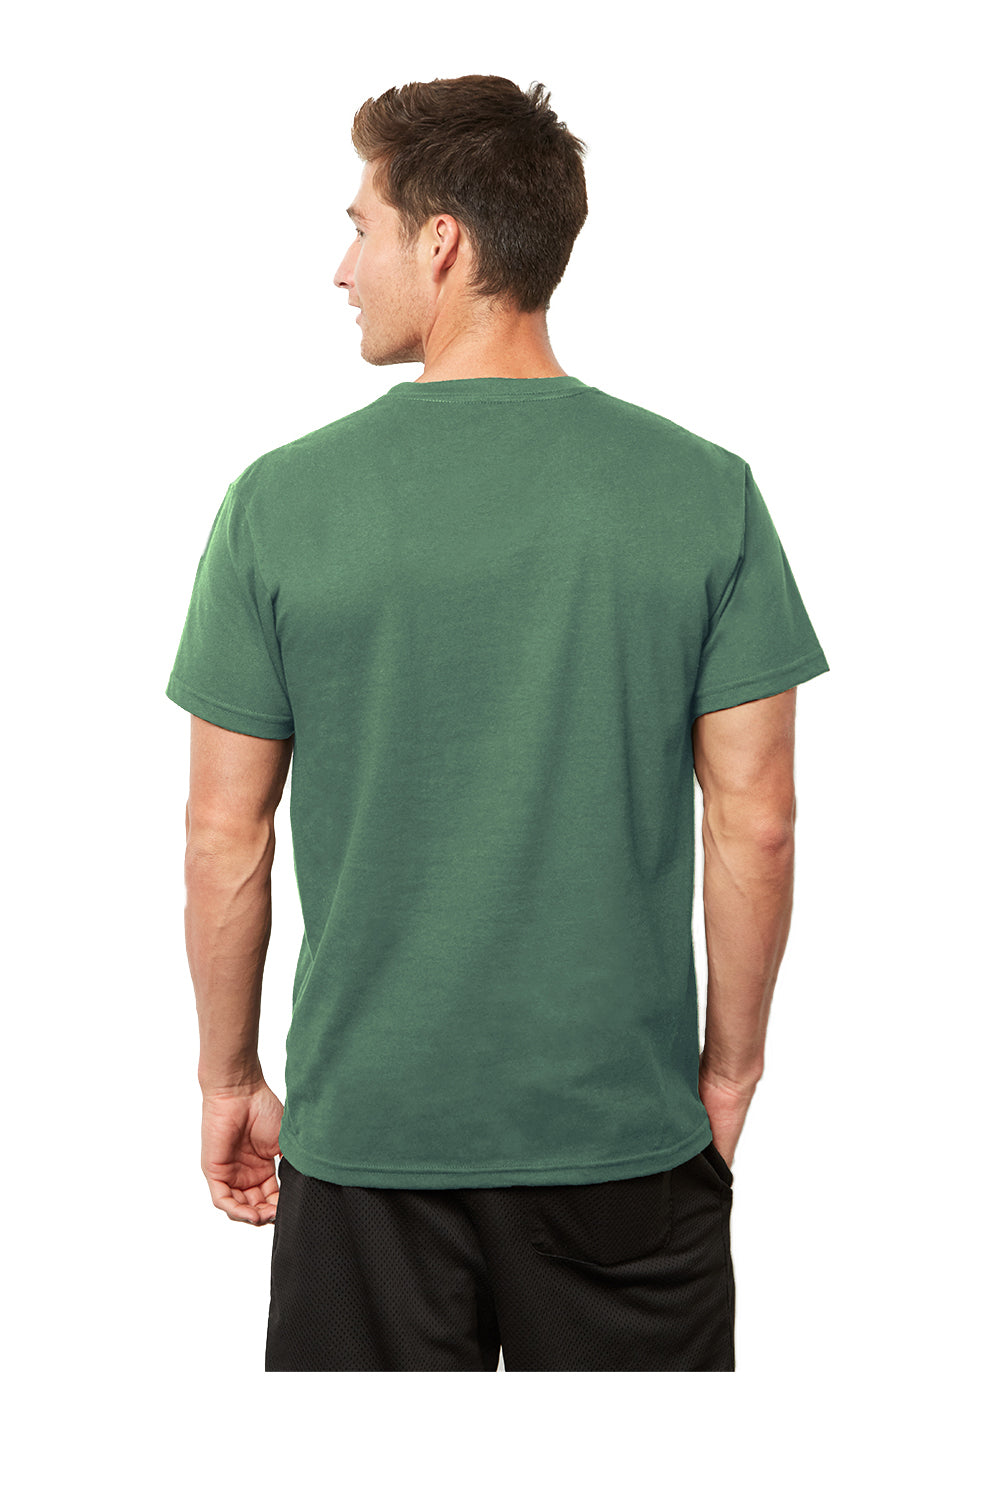 Next Level 4600 Mens Eco Short Sleeve Crewneck T-Shirt Royal Pine Green Back